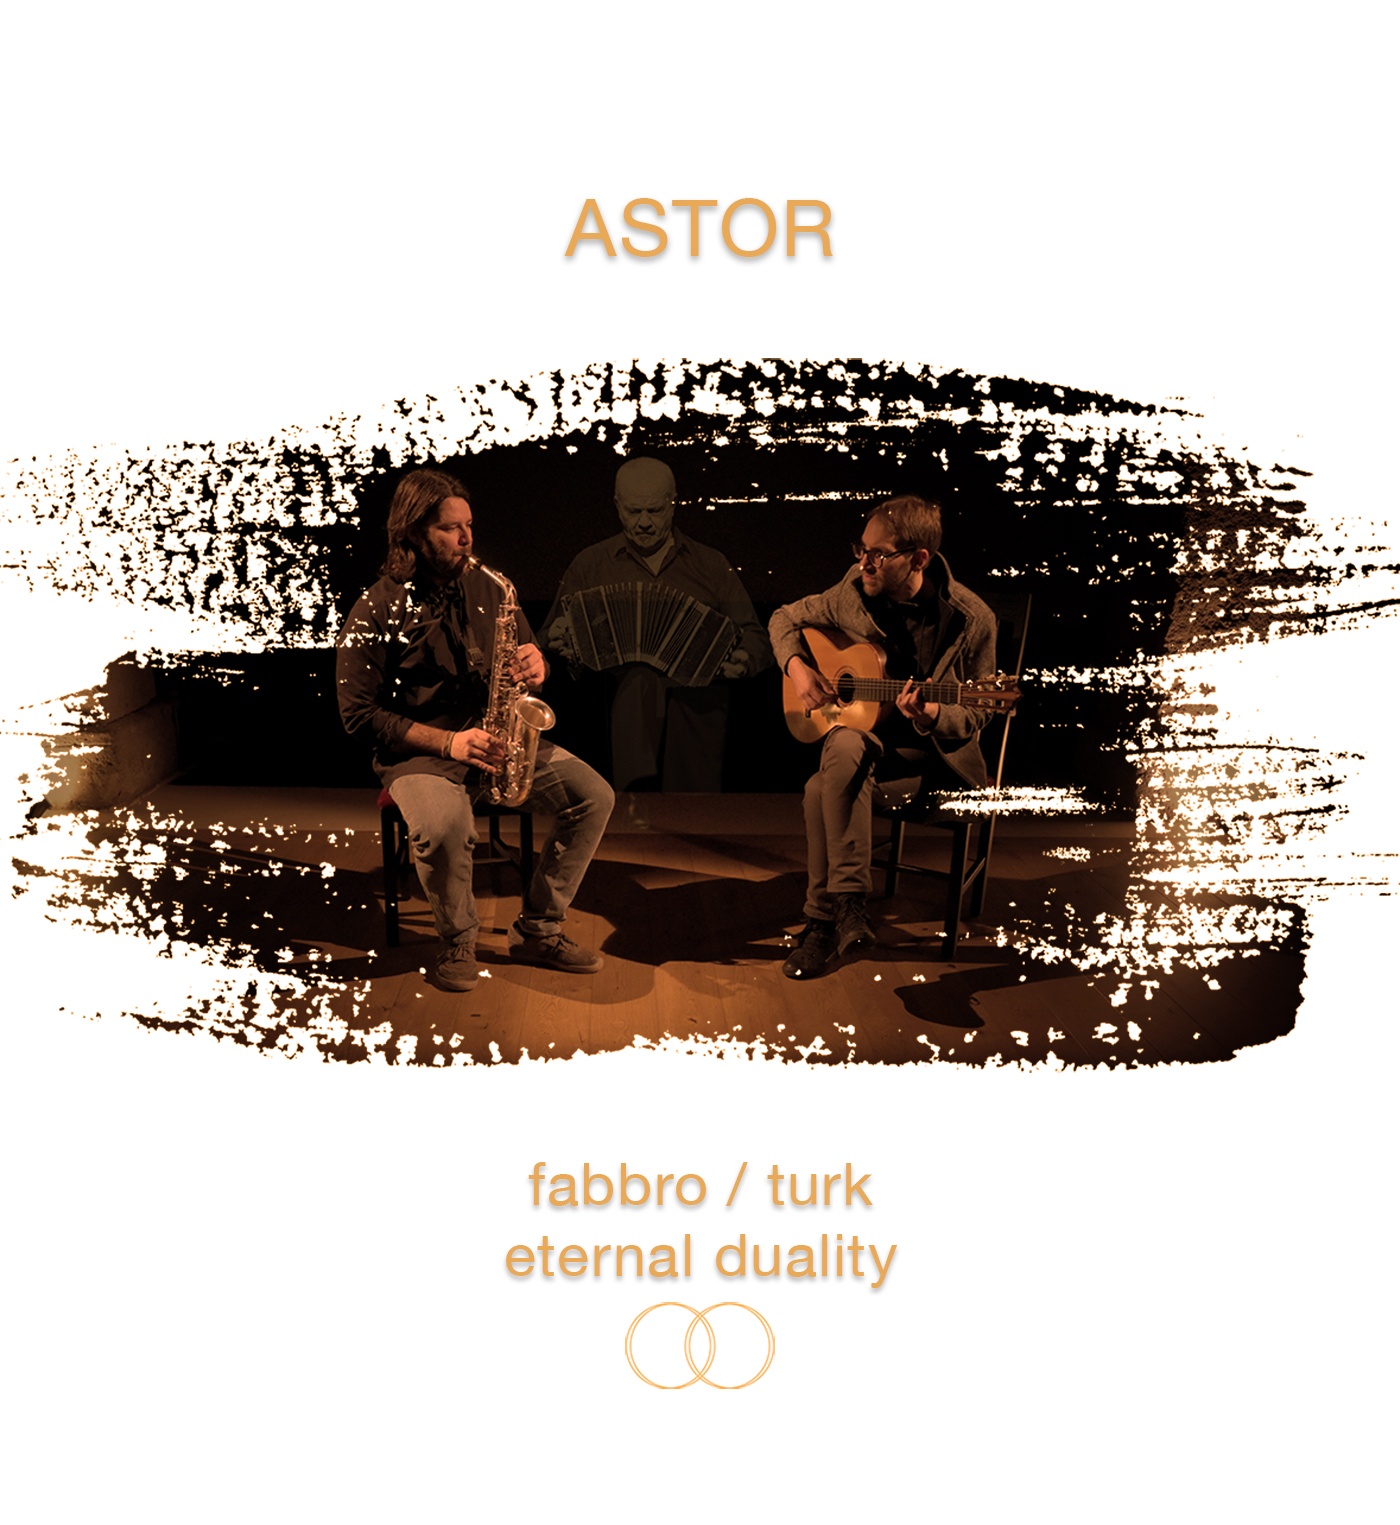 Fabbro/Turk Eternal Duality z novim albumom in videom